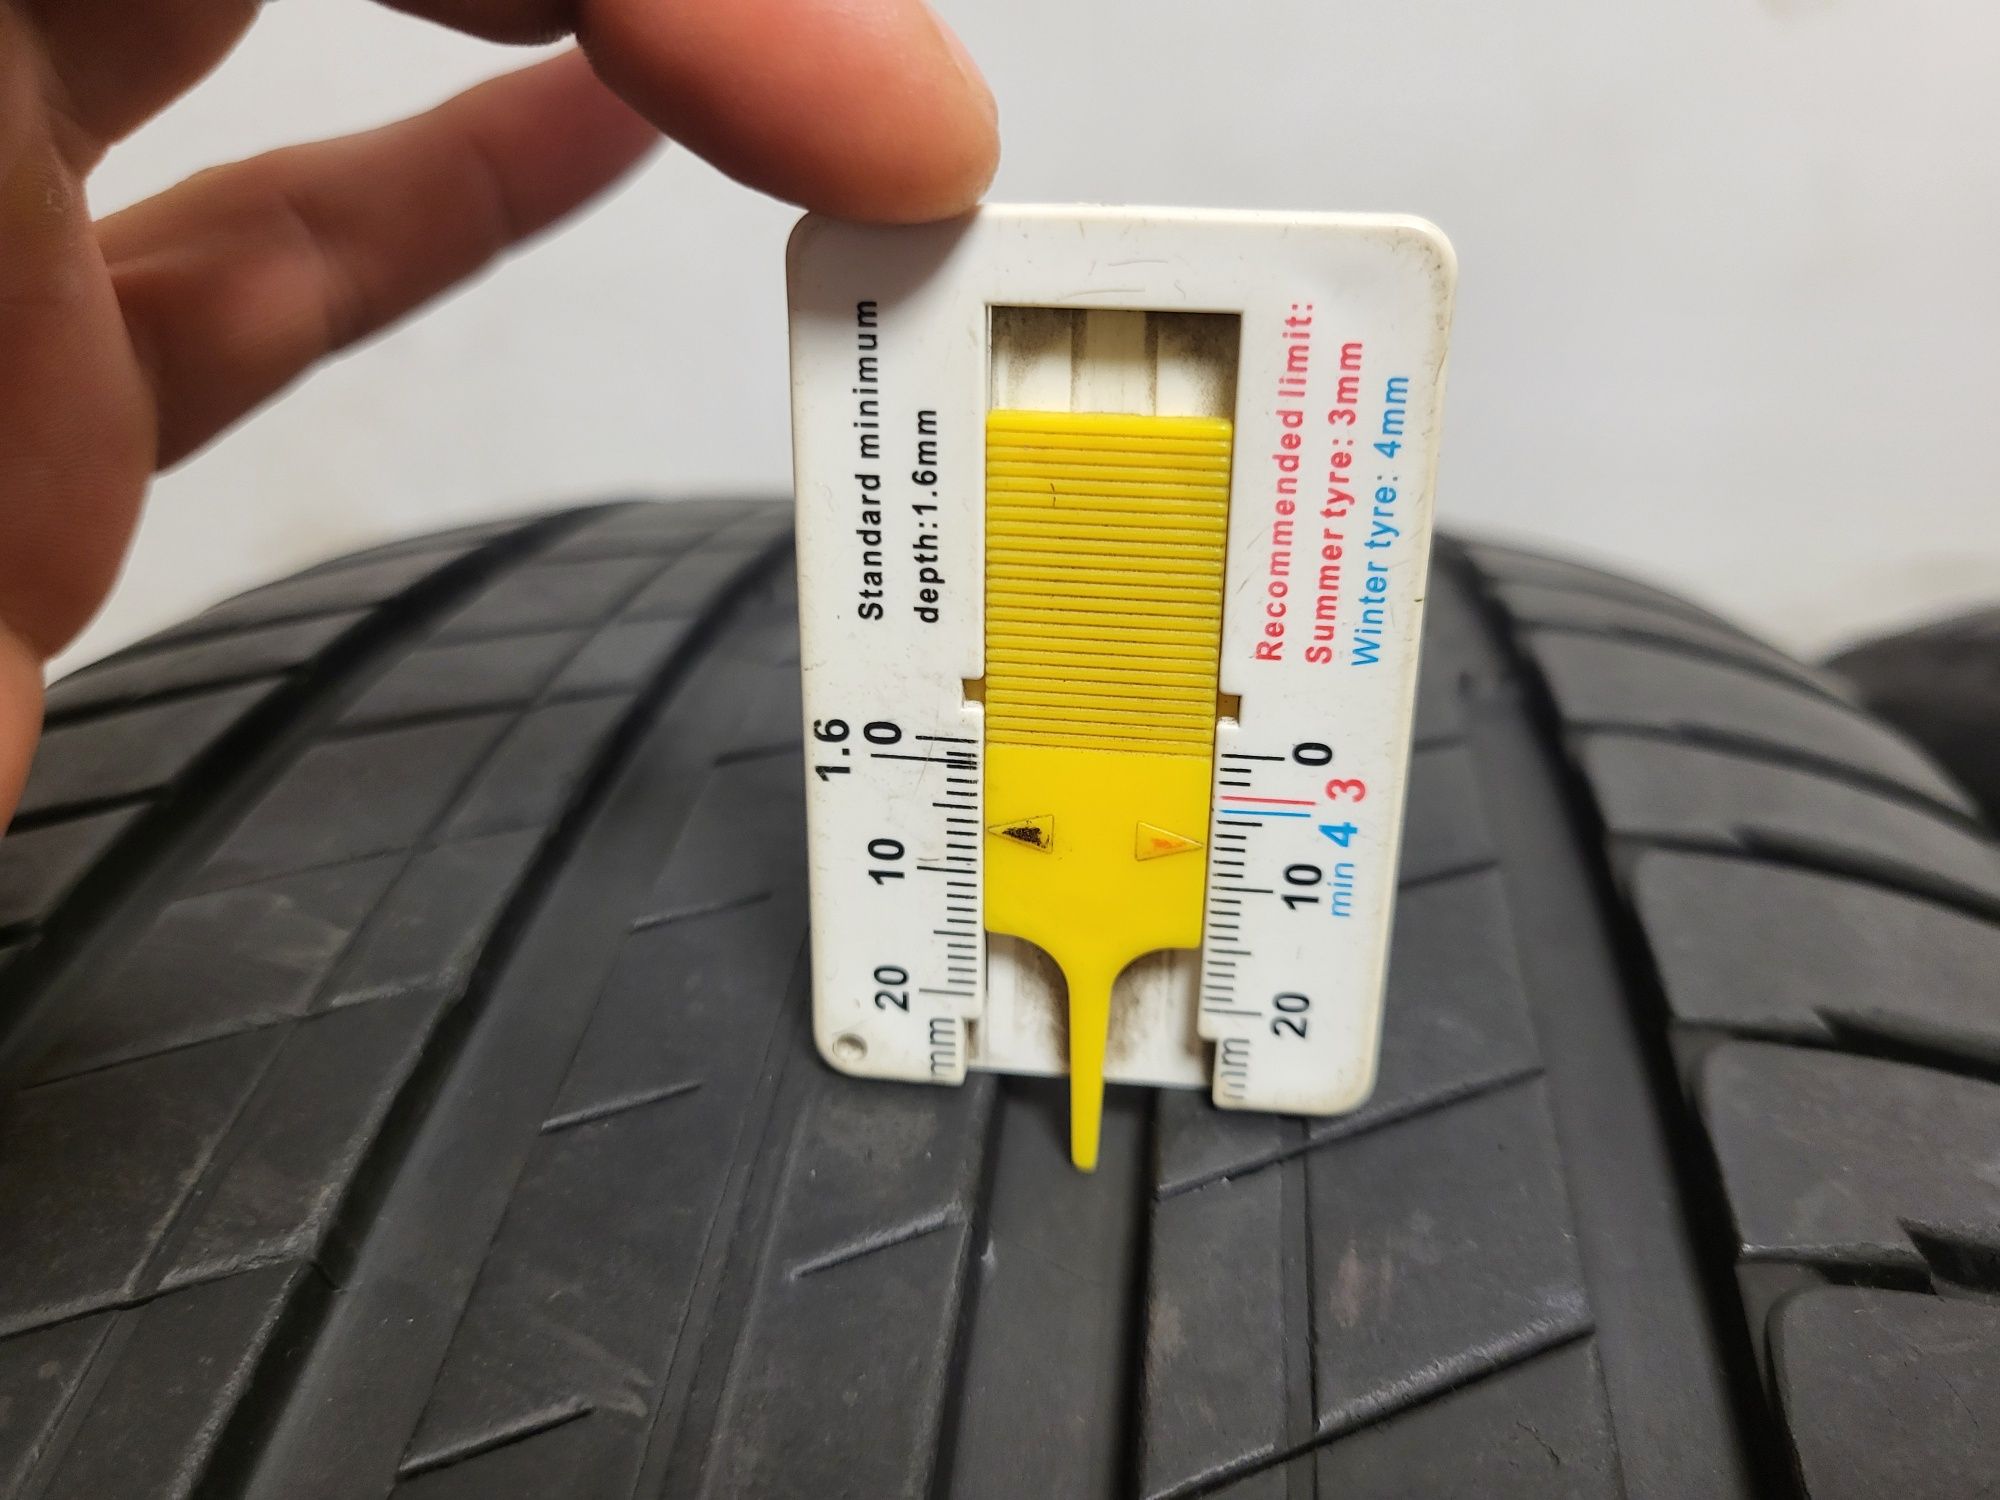 275/50/20 Michelin / летни гуми джип